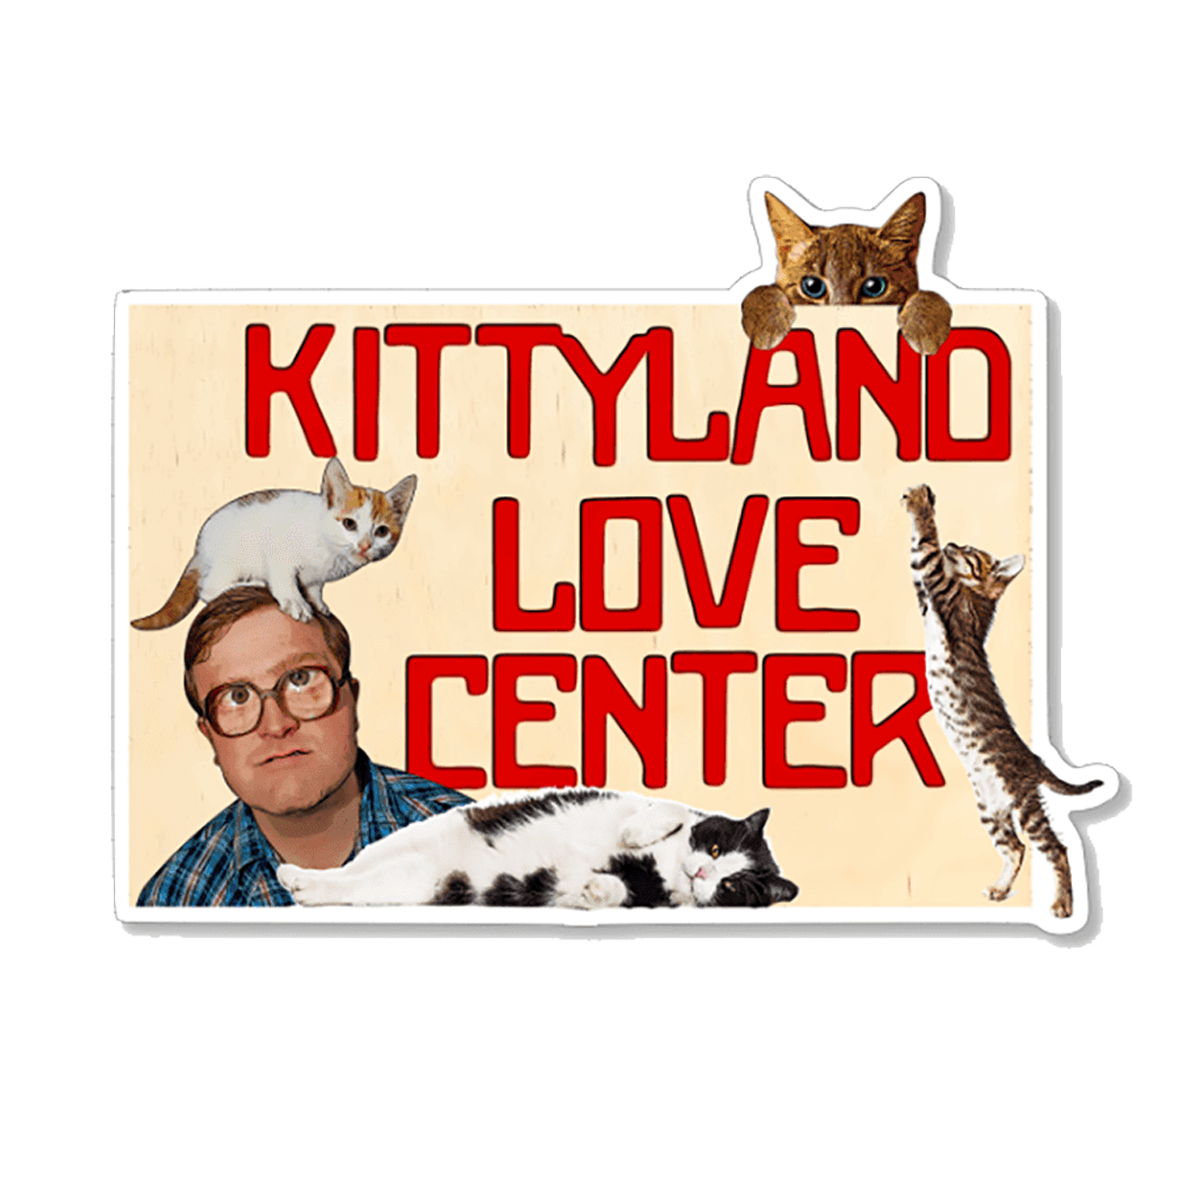 Trailer Park Boys - Kittyland Love Center